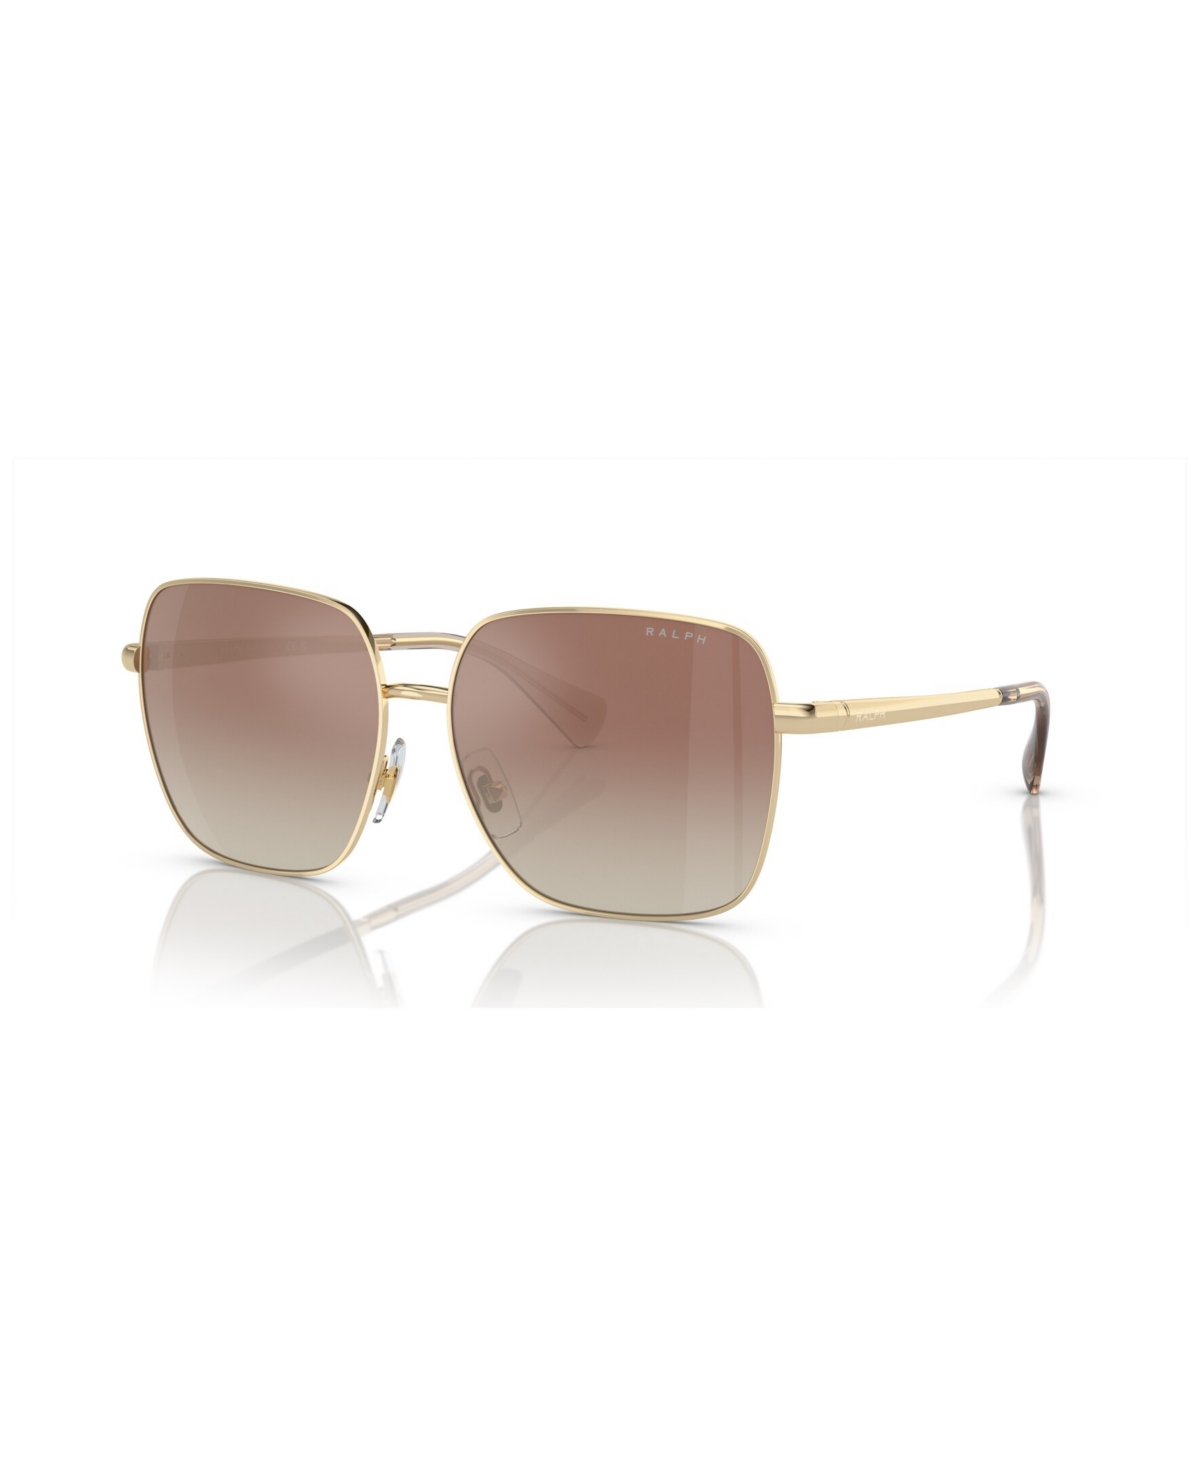 Ralph By Ralph Lauren Women's Sunglasses, Mirror Gradient Ra4142 In Shiny Pale Gold